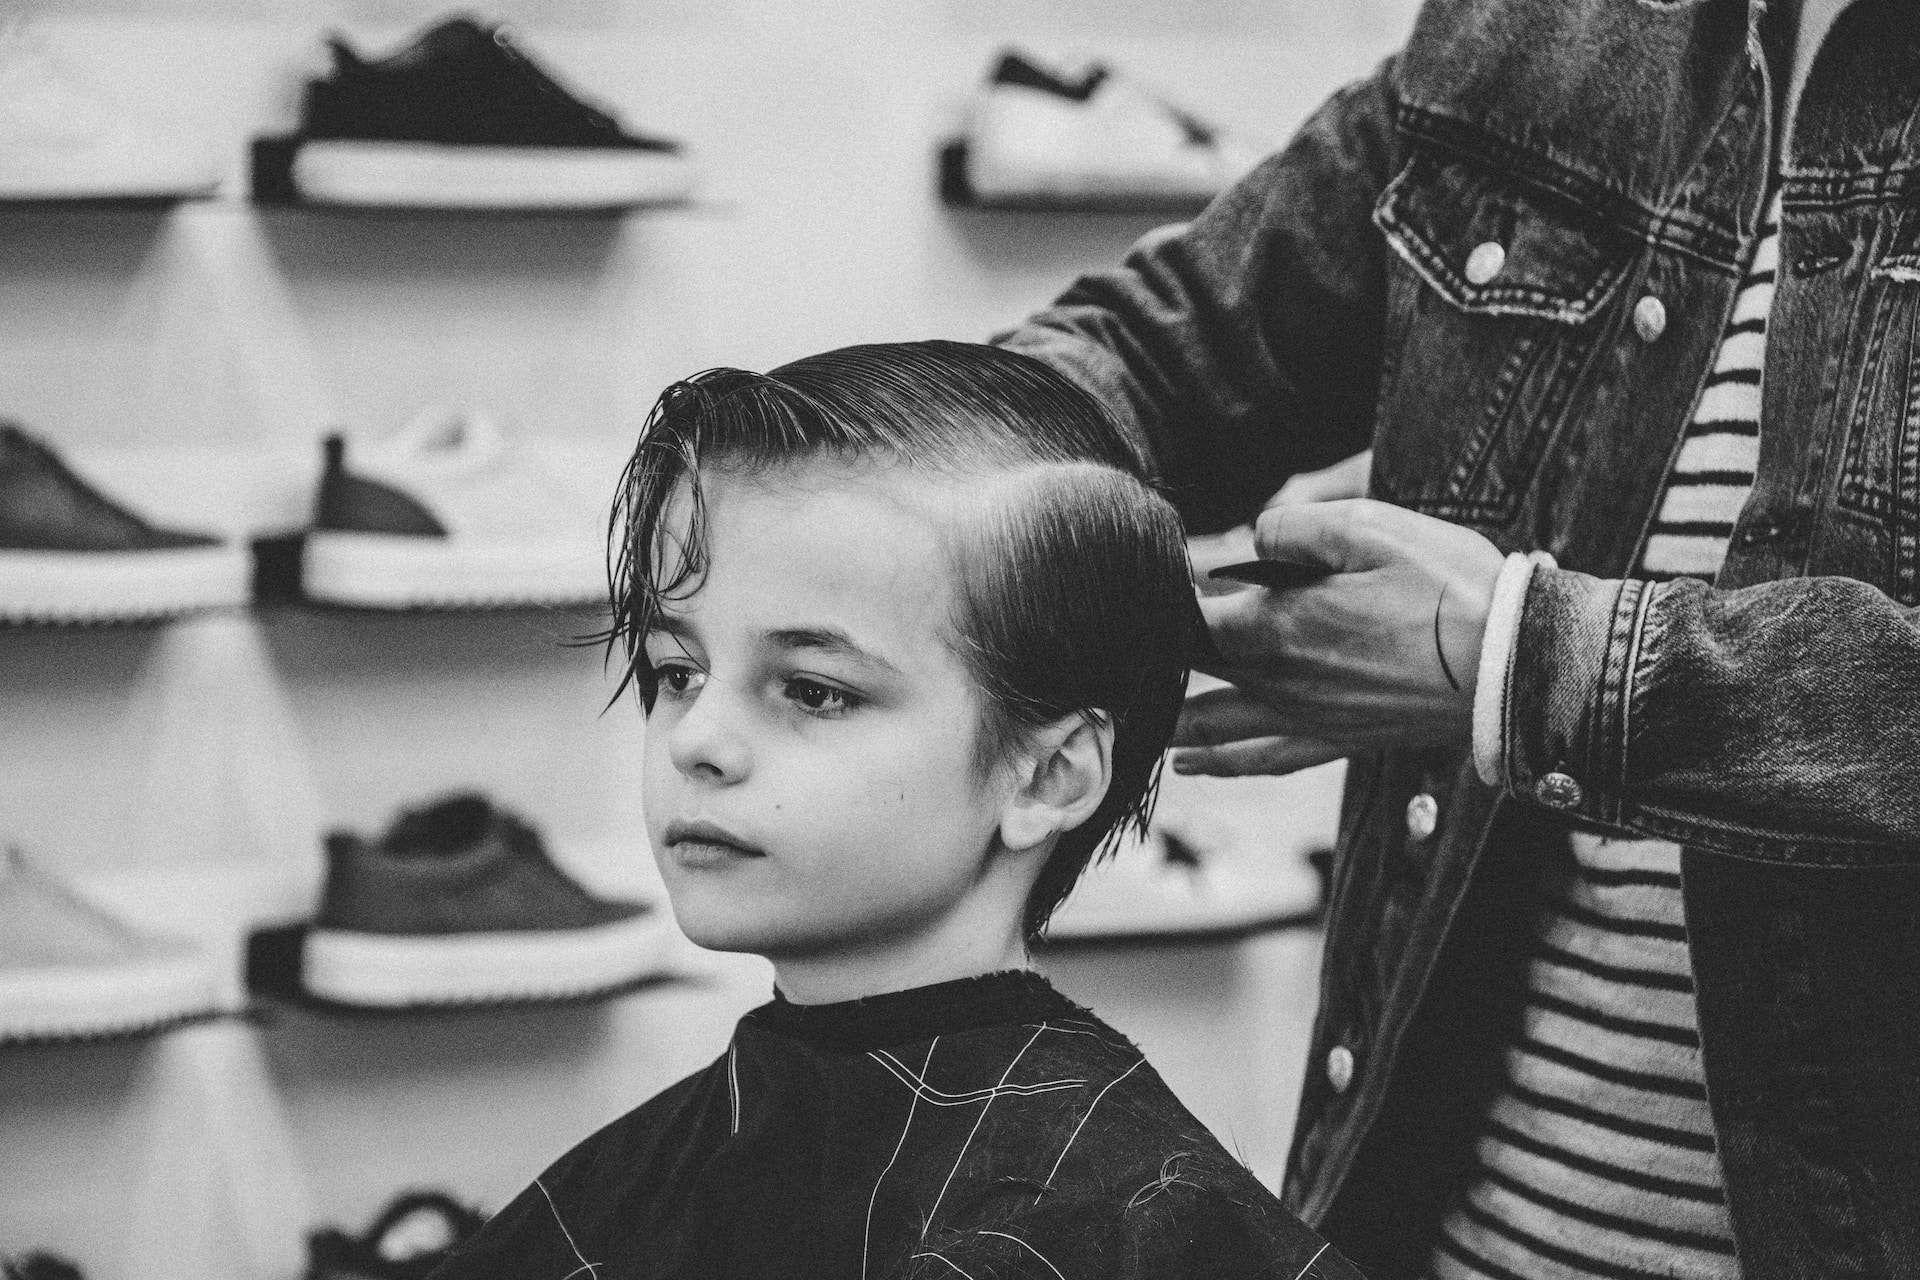 greyscale photo of boy having a haircut